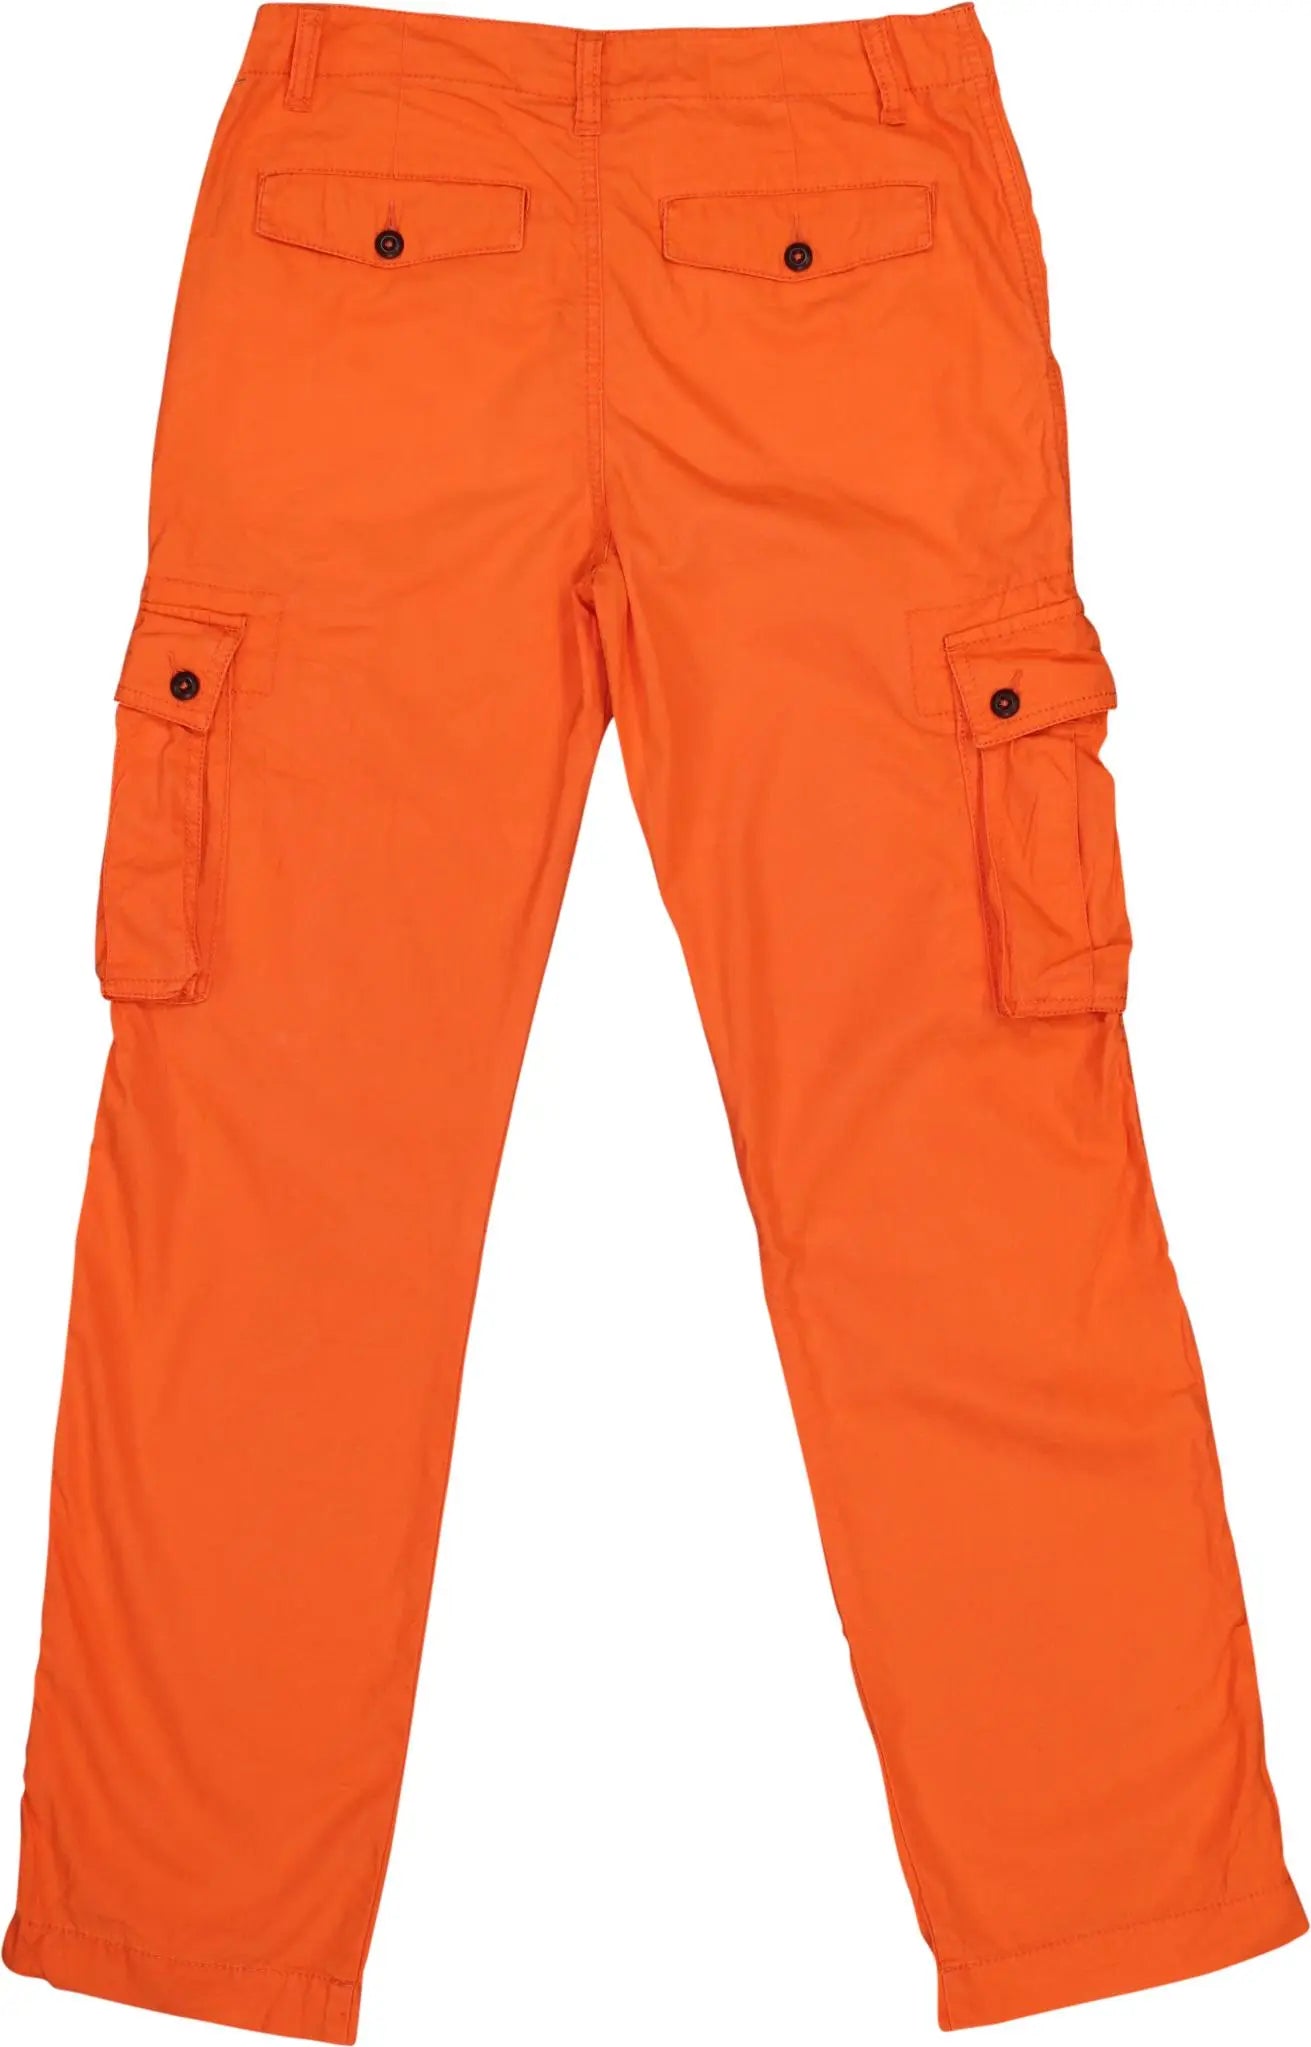 Ralph Lauren - Orange Trousers by Ralph Lauren- ThriftTale.com - Vintage and second handclothing